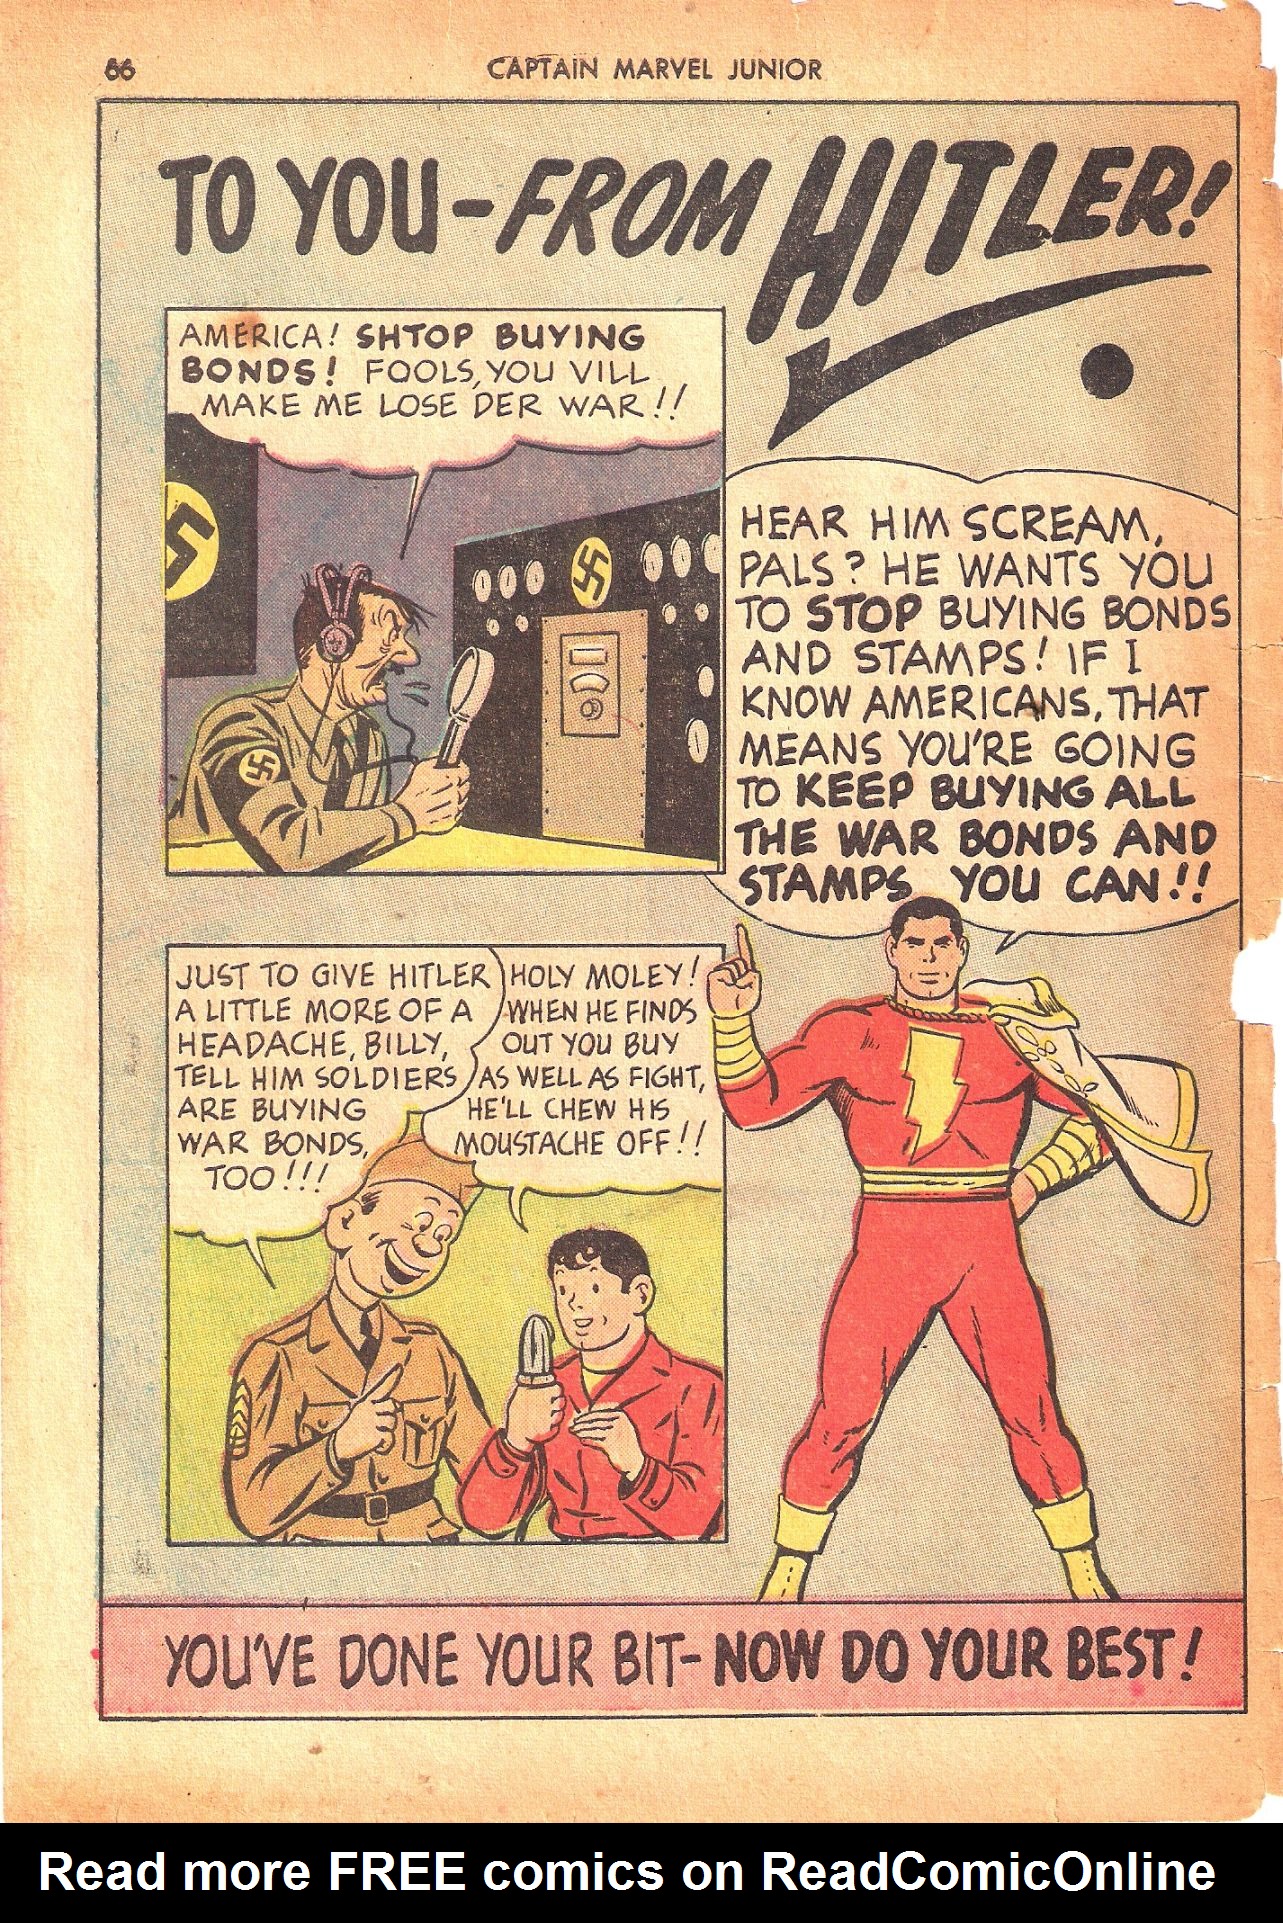 Read online Captain Marvel, Jr. comic -  Issue #09 - 66